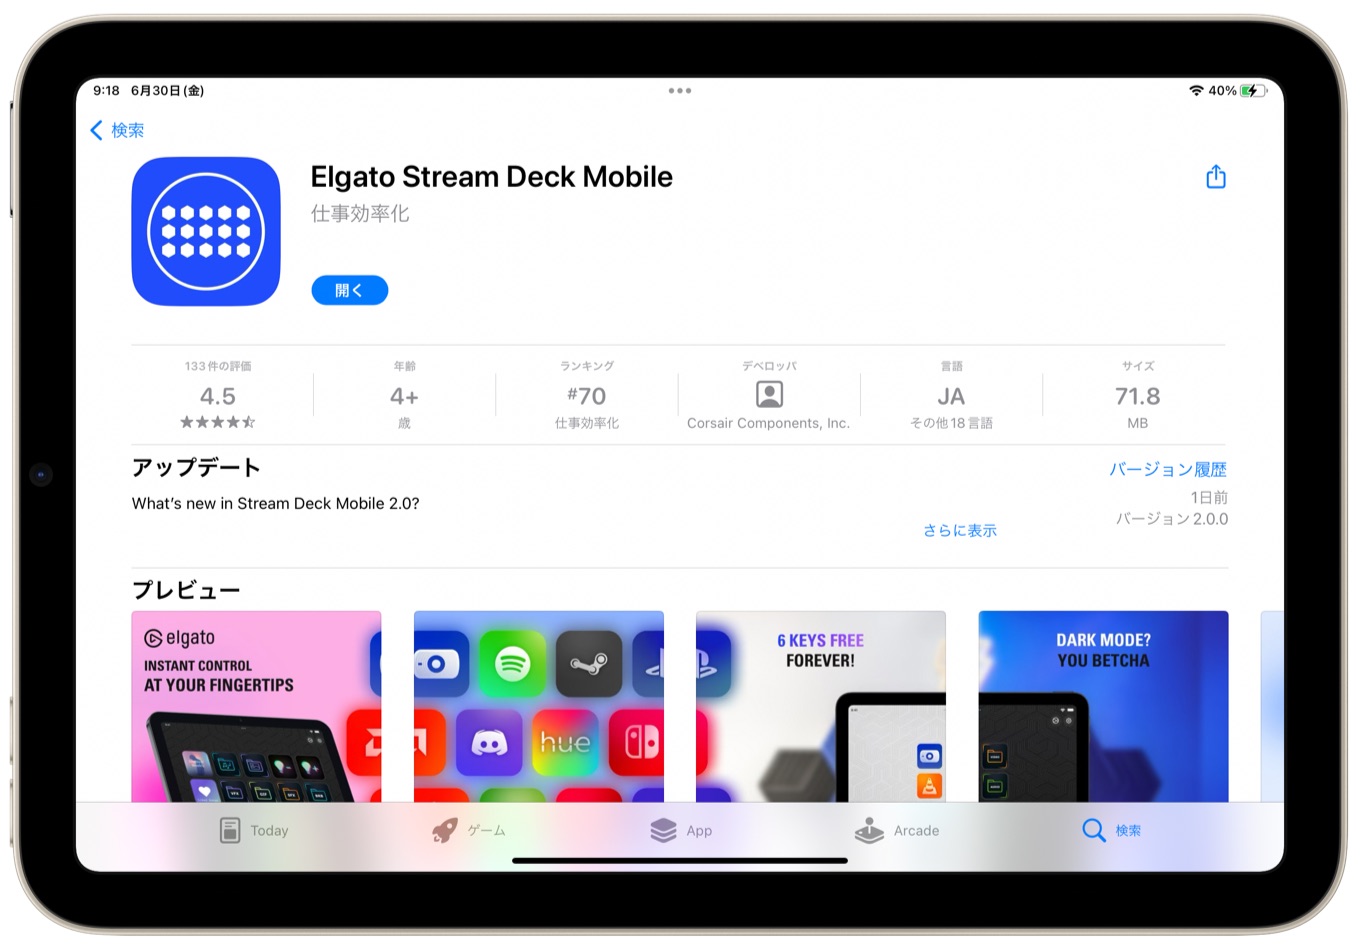 Elgato Stream Deck Mobile v2 for iPad